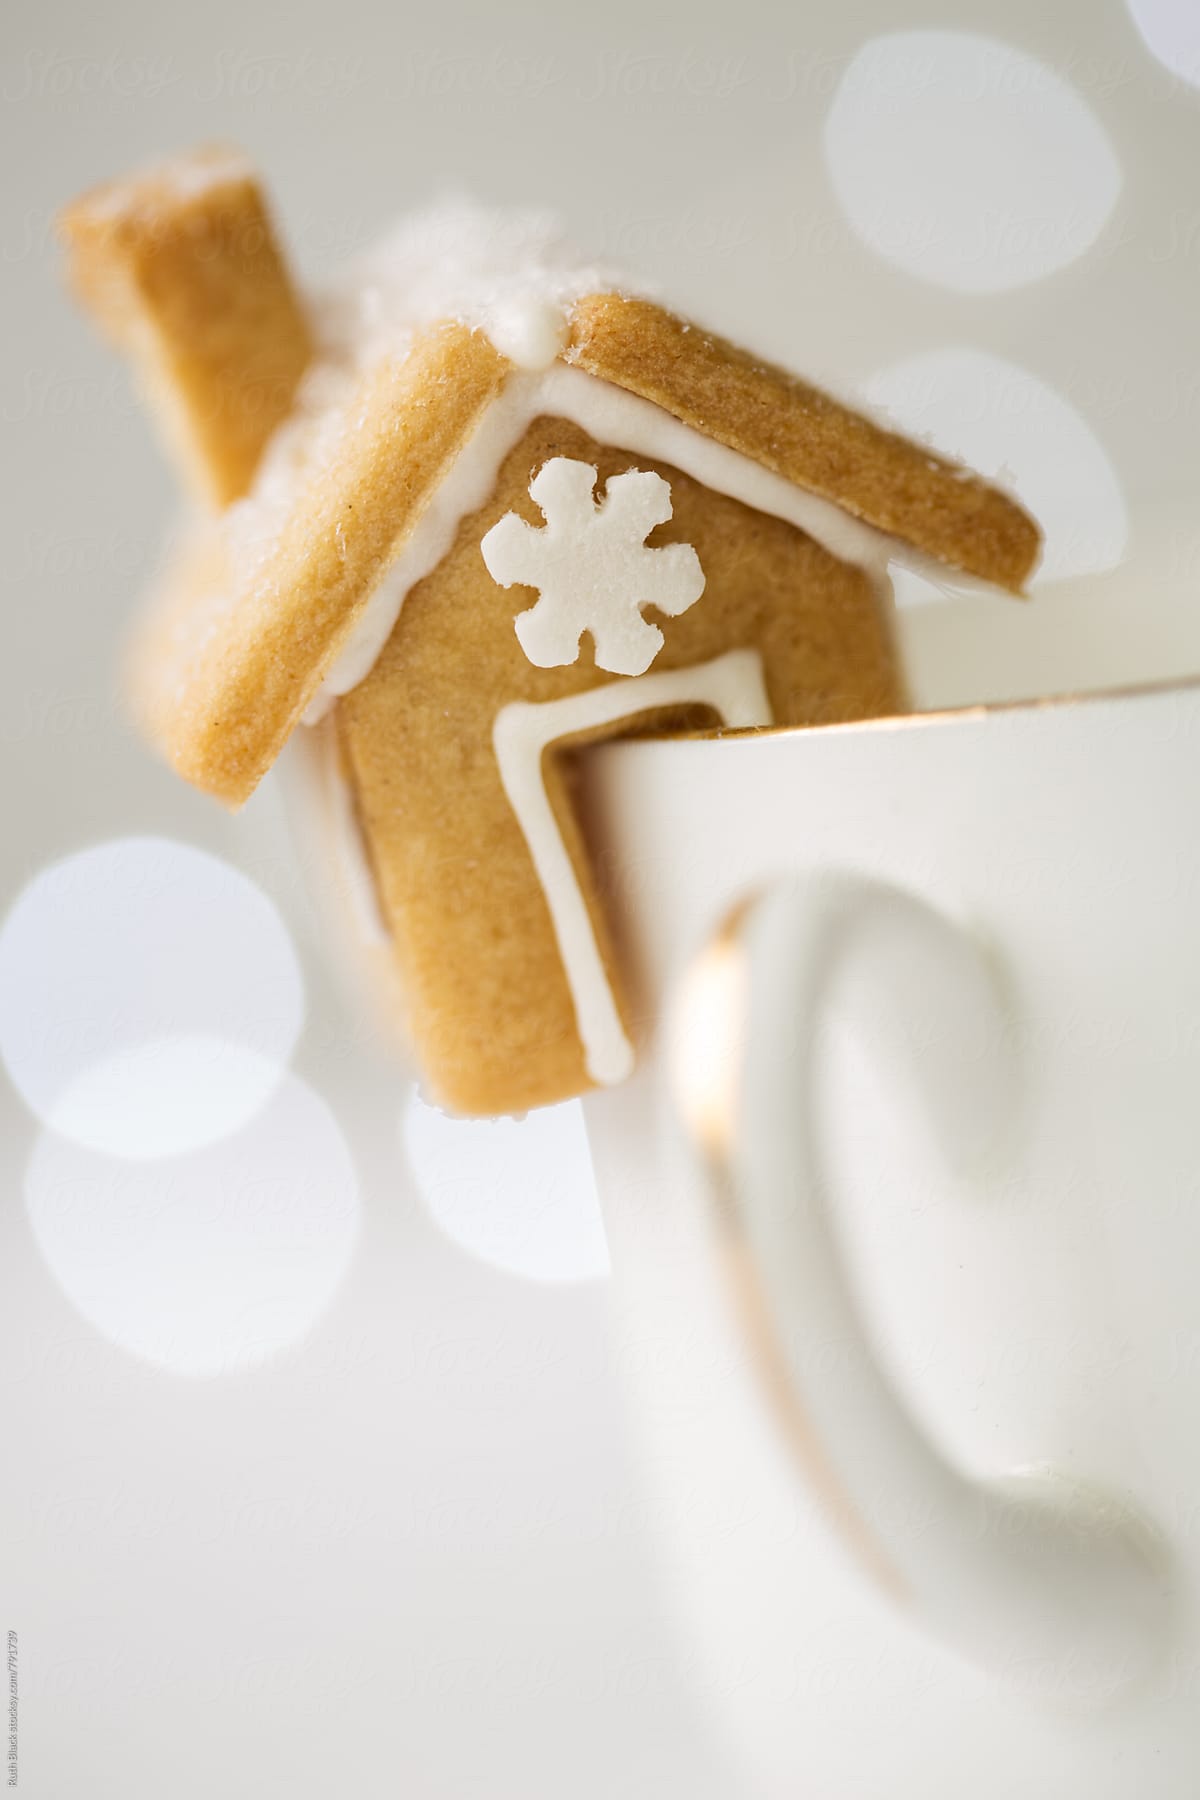 "Mini Gingerbread House" by Stocksy Contributor "Ruth Black" - Stocksy